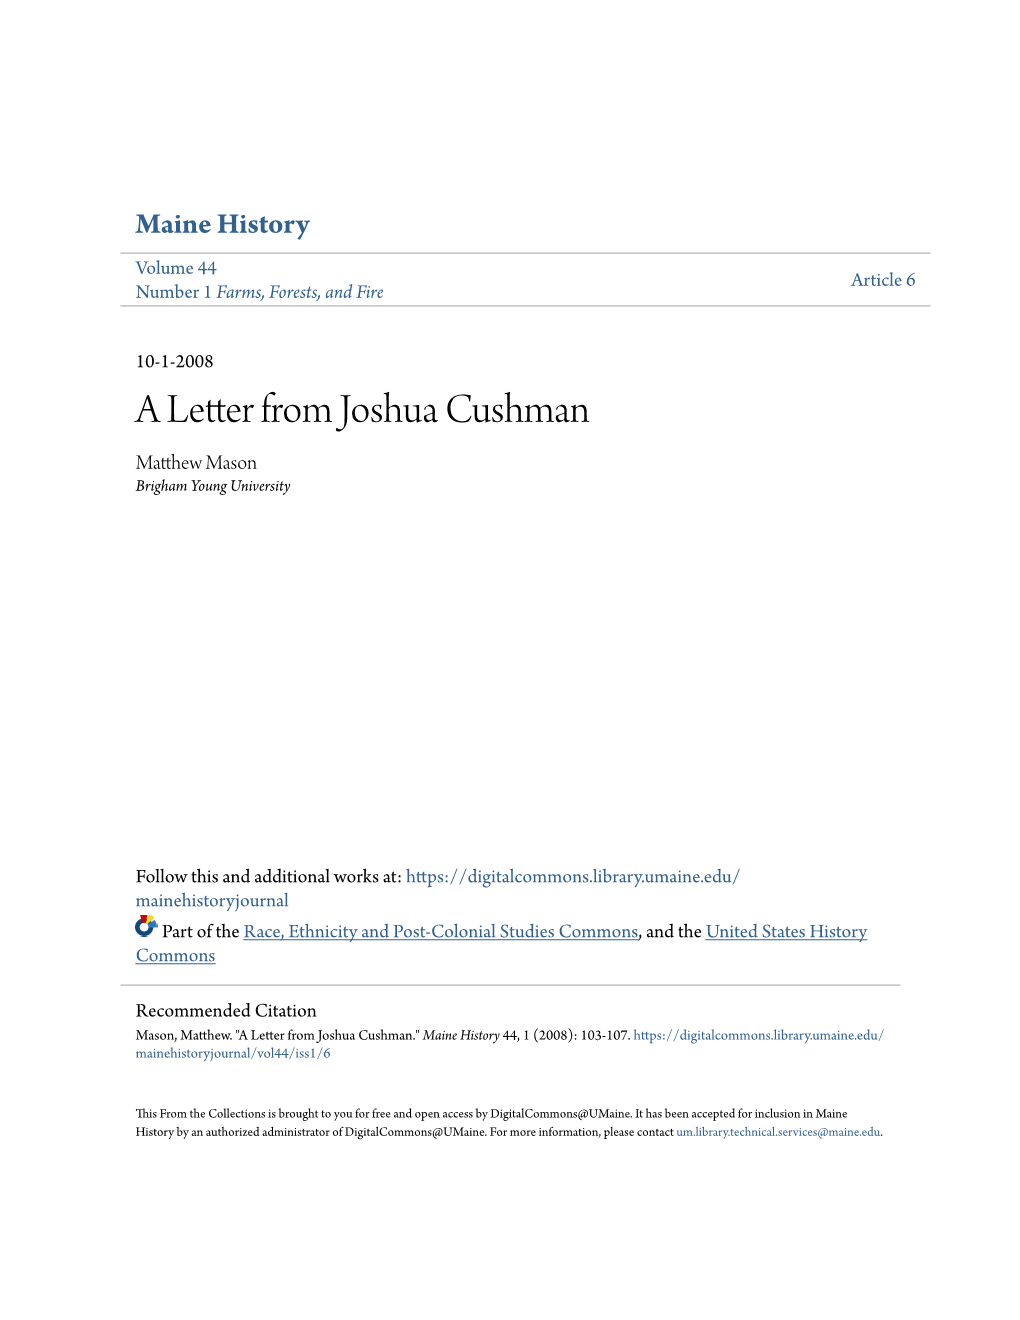 A Letter from Joshua Cushman Matthew Am Son Brigham Young University